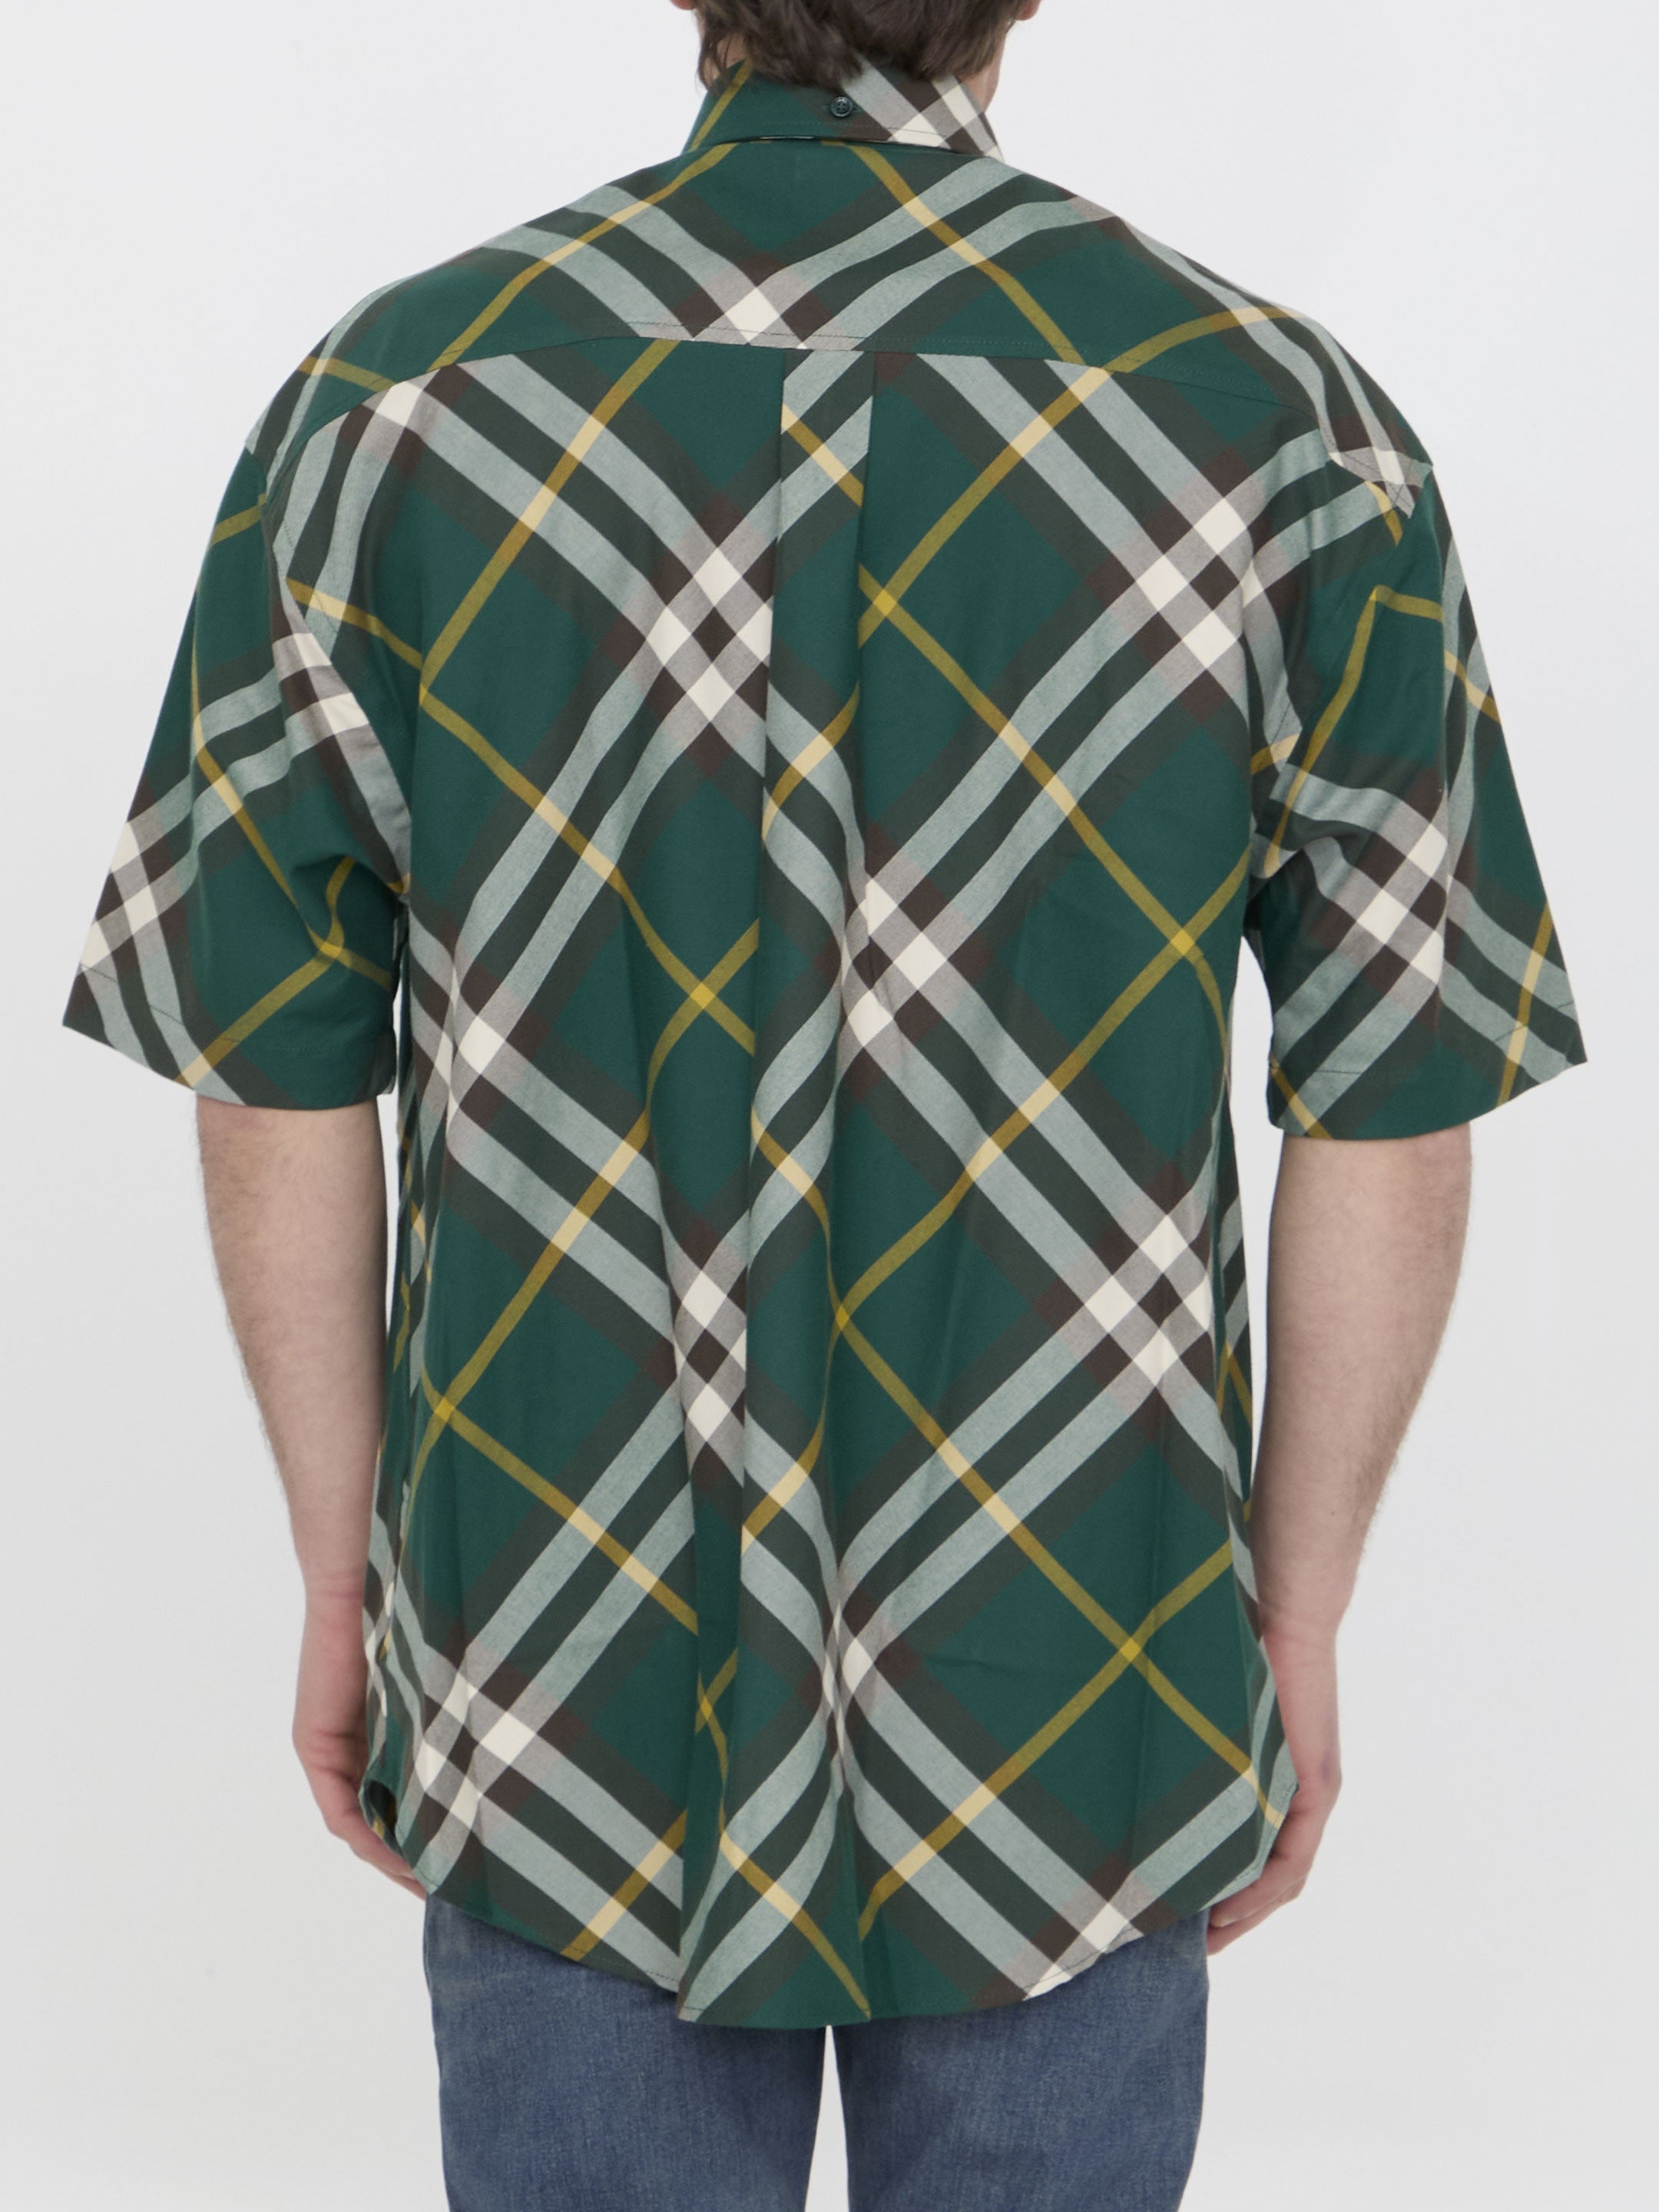 BURBERRY-OUTLET-SALE-Check-cotton-shirt-Shirts-ARCHIVE-COLLECTION-4_63b5cfbd-7fa5-42b3-b61f-3e93be9022e7.jpg